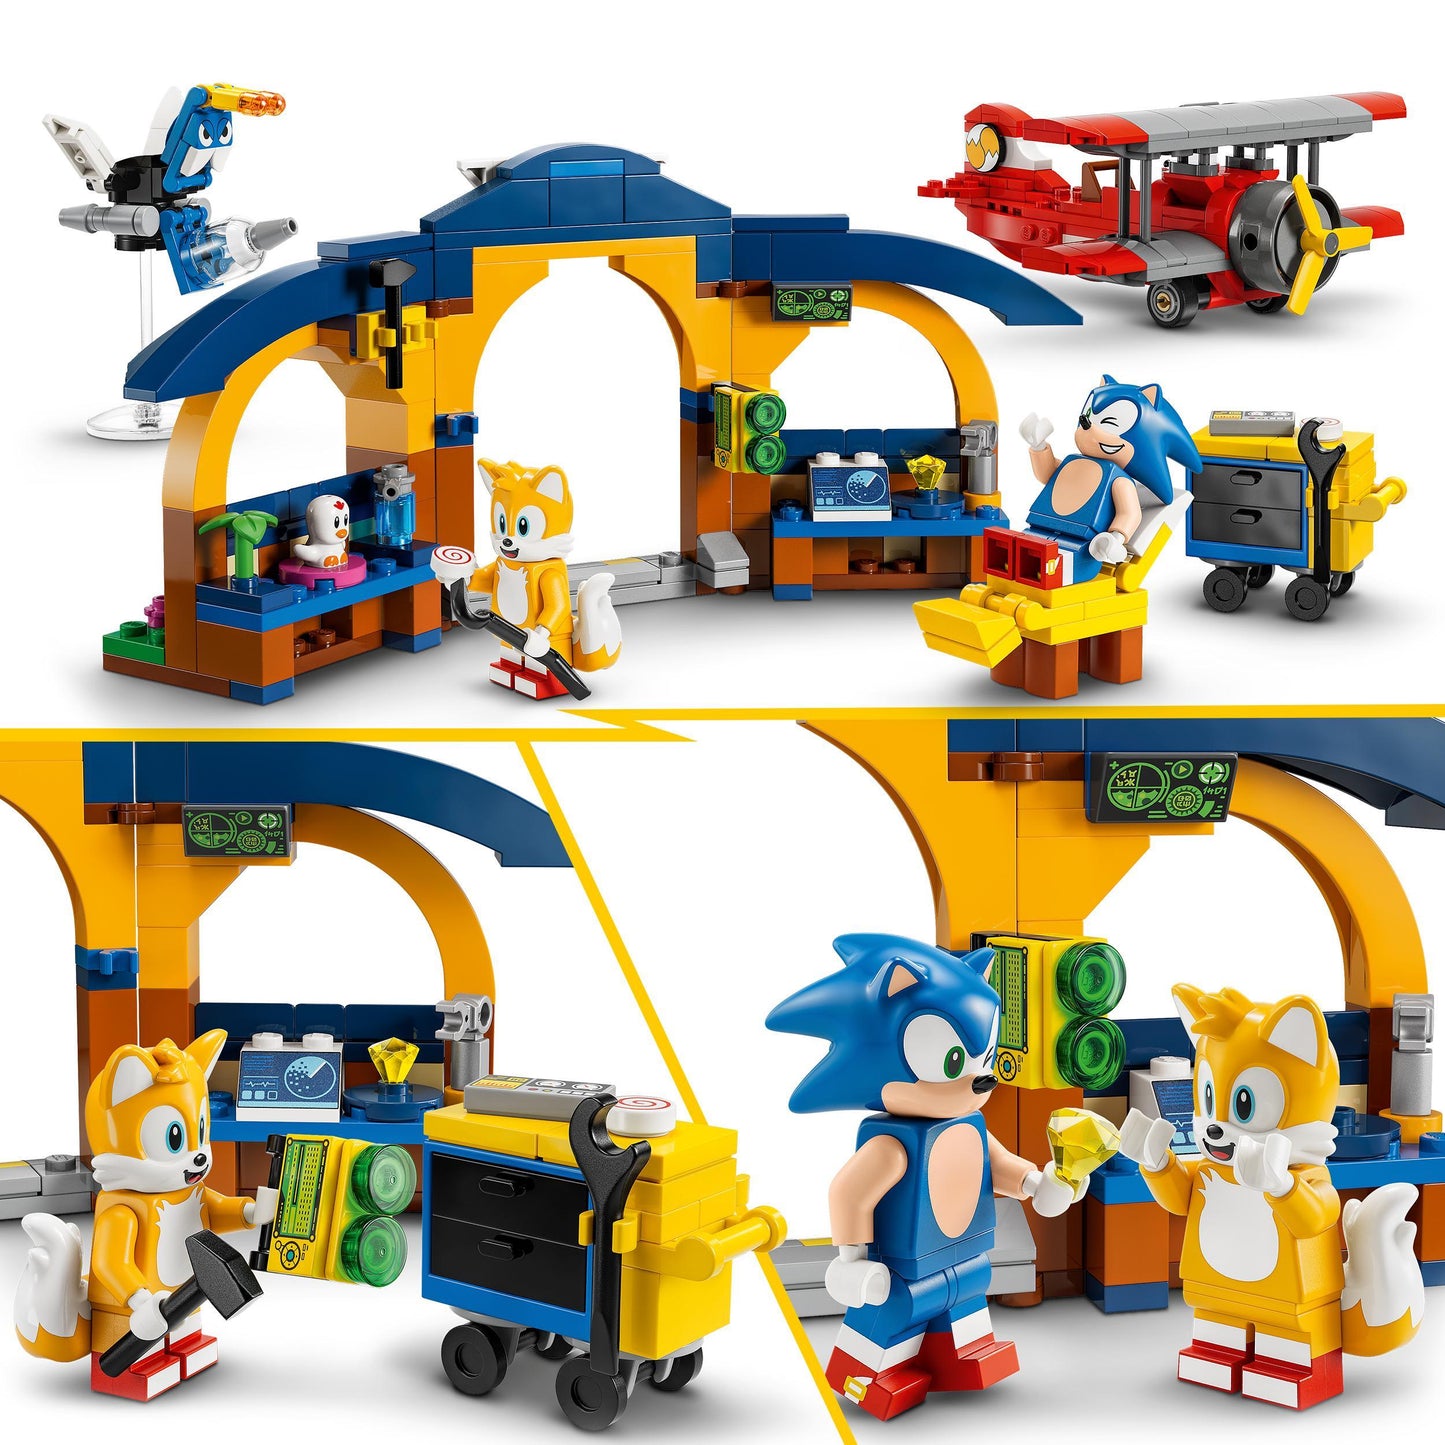 LEGO Tails' tornadovlieger met werkplaats 76991 Sonic LEGO @ 2TTOYS LEGO €. 36.48